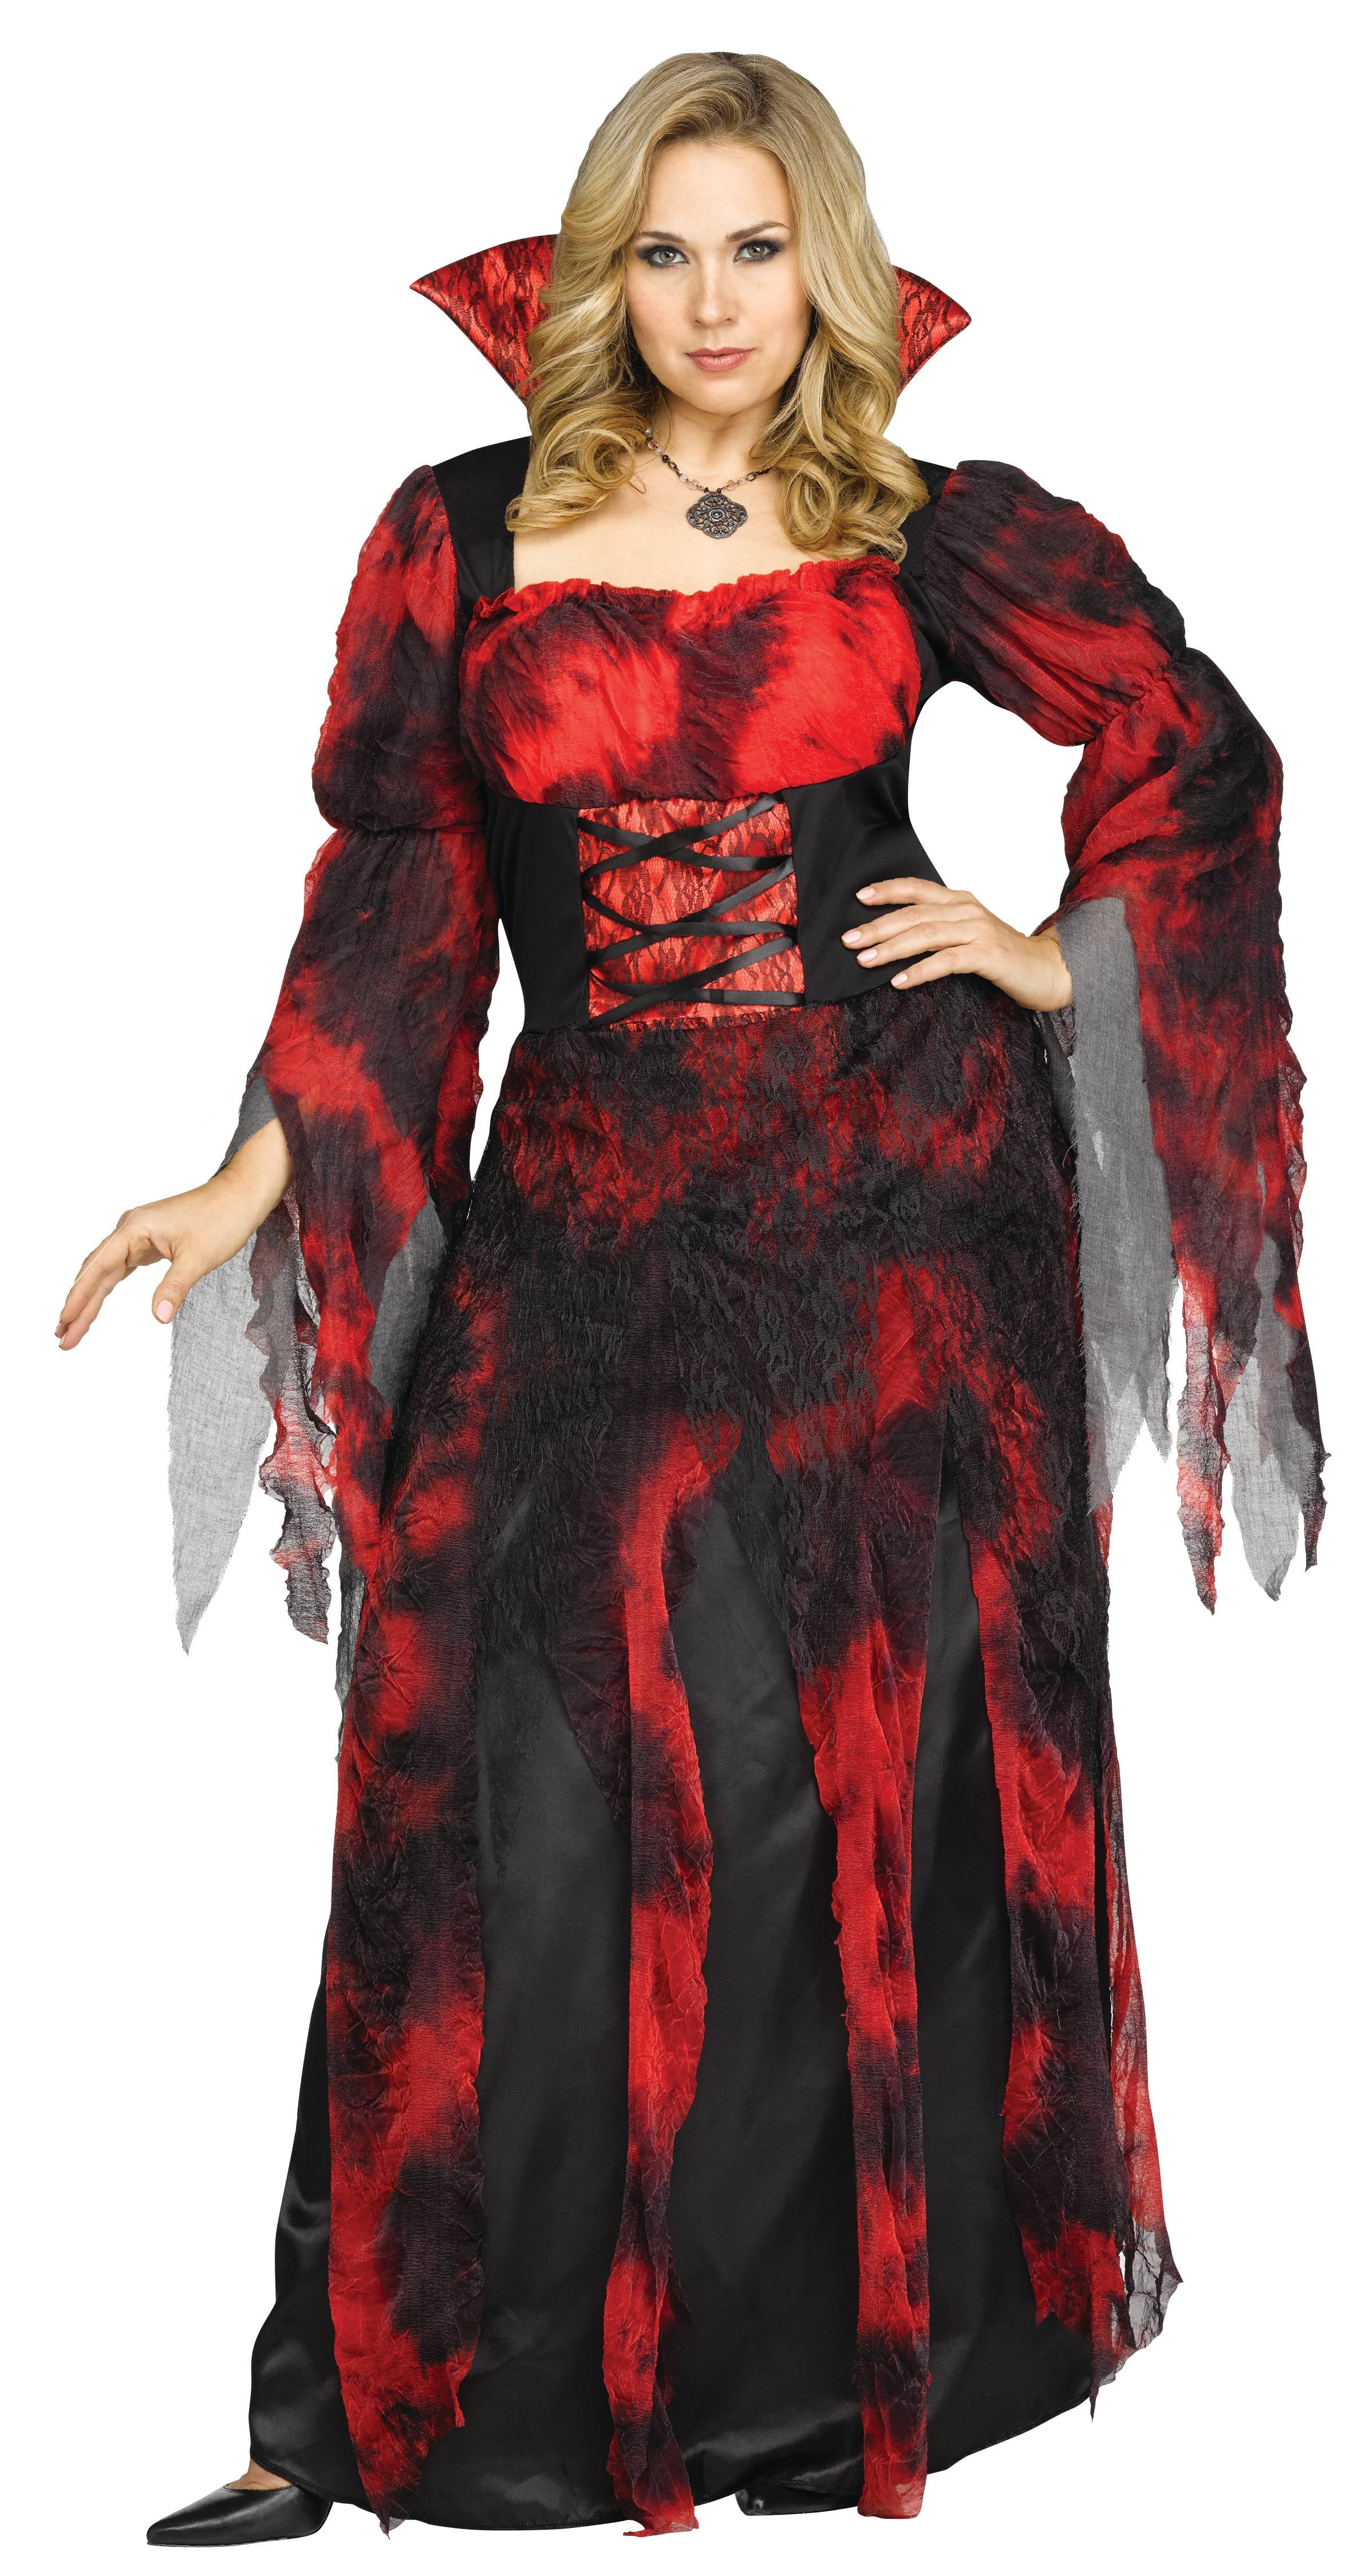  Halloween  Women s Countessa Adult Costume  Size Extra Large  